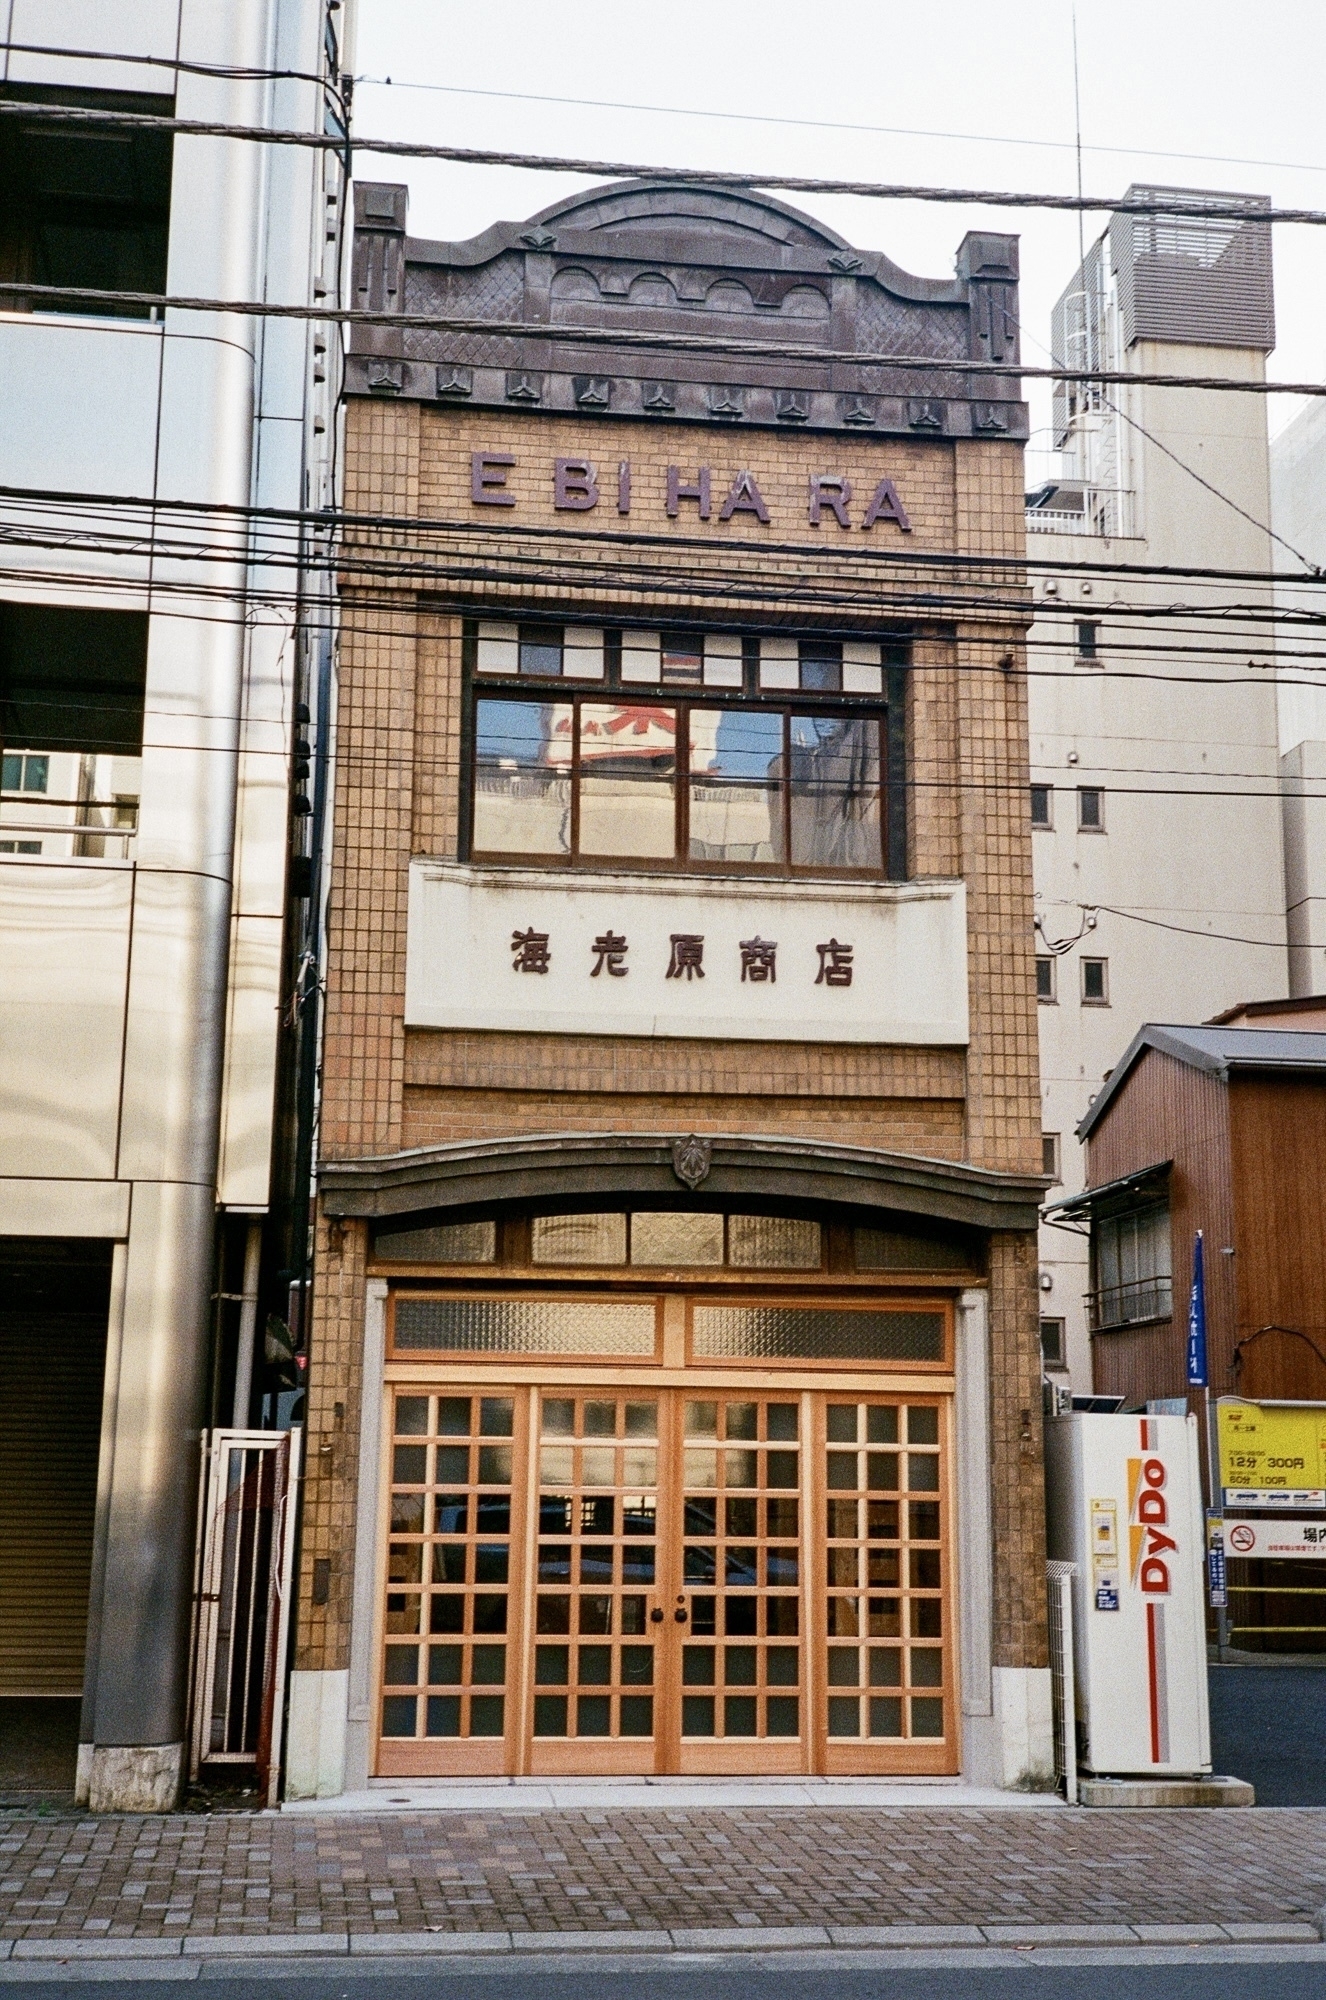 Old building in Akihabara Tokyo, with “EBIHARA” sign in English along the top, and “Ebihara Shoten” in Japanese under the windows. 